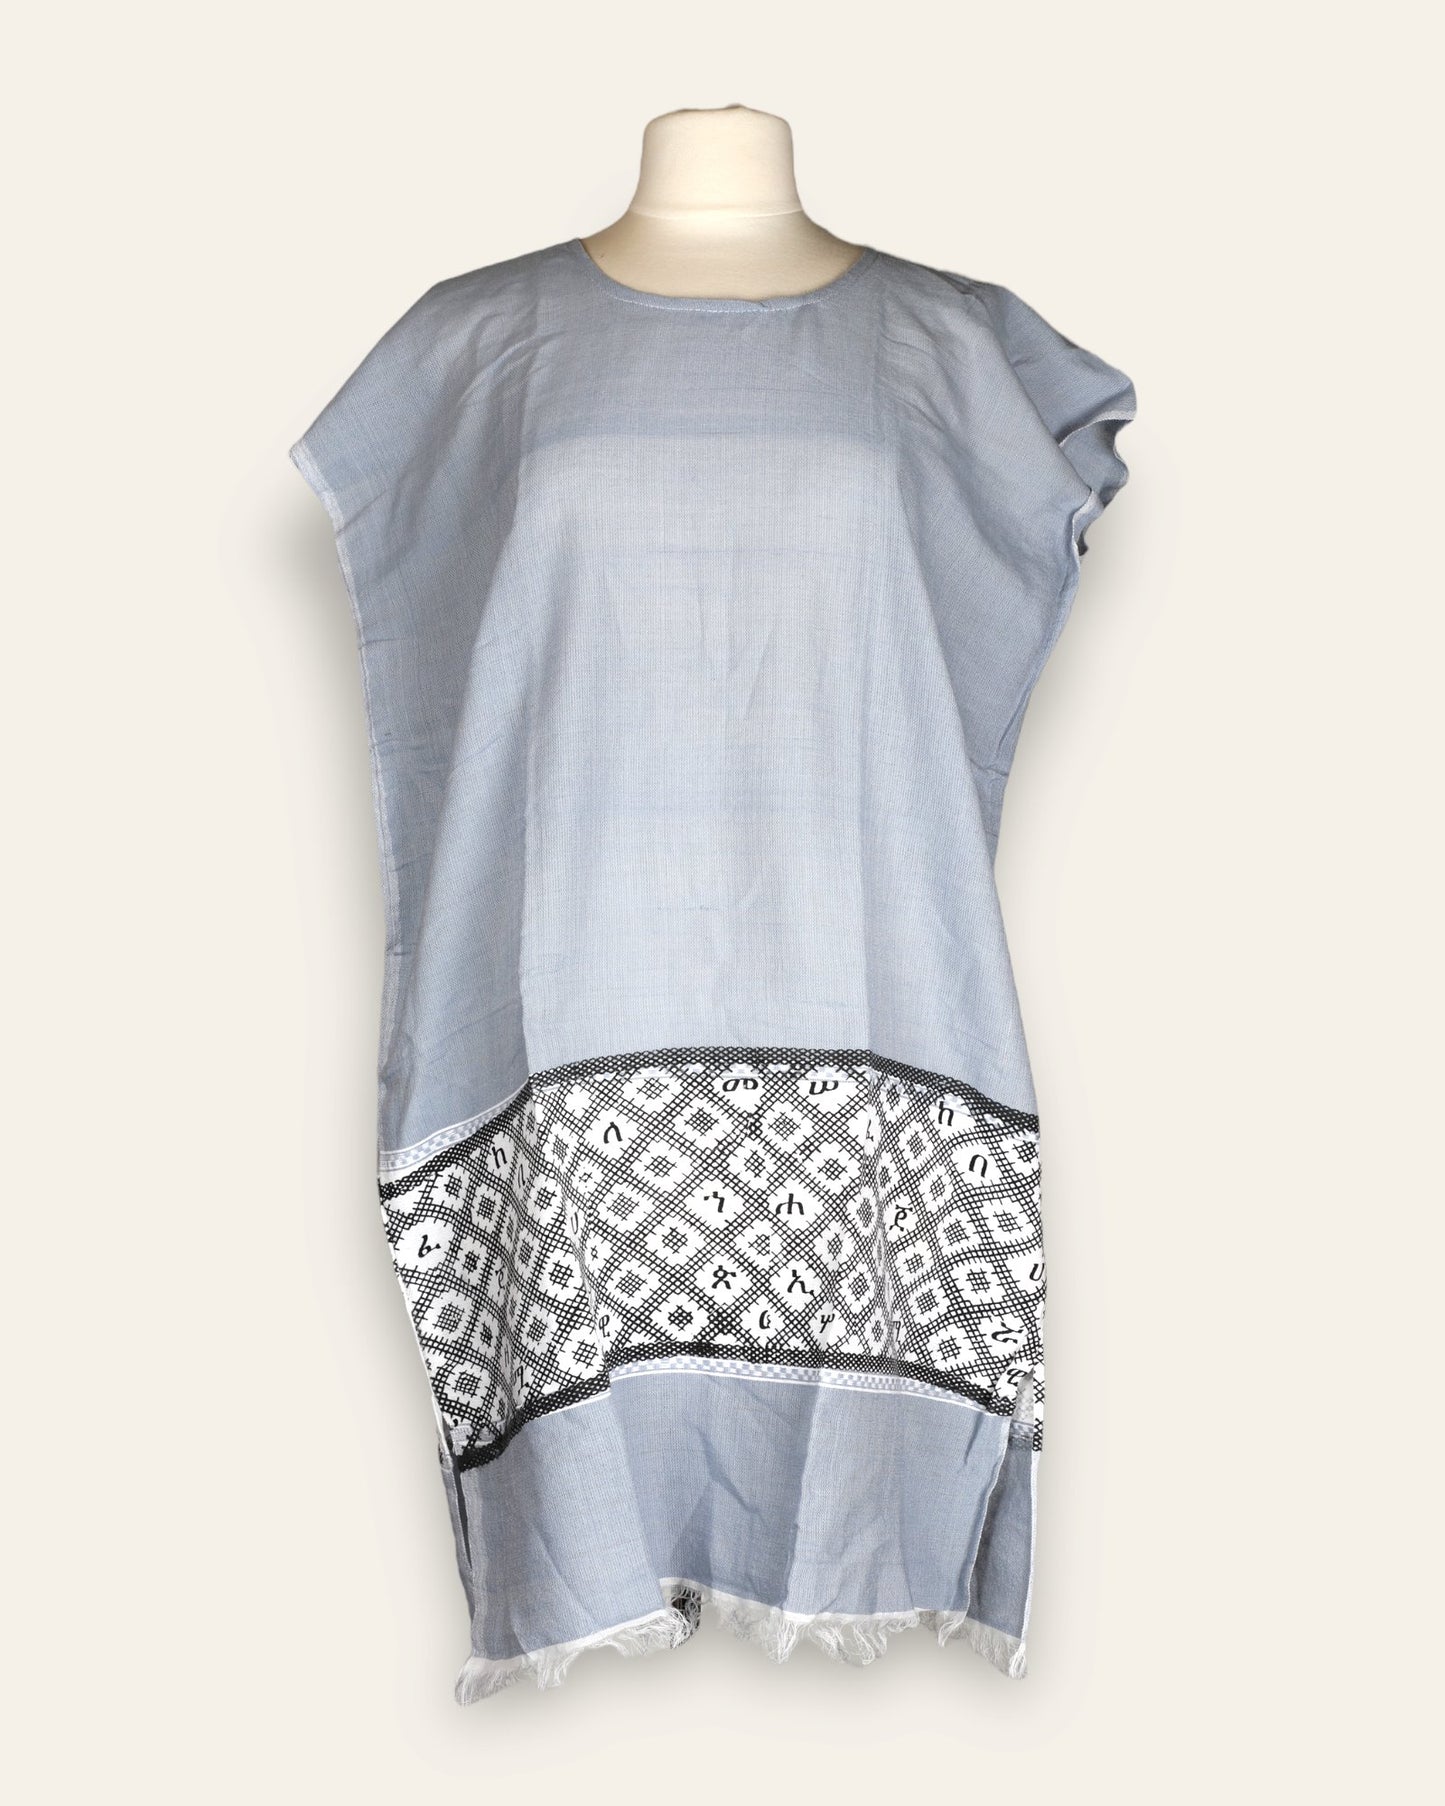 Naybuna Handmade 100% Cotton Dress #14 Extras Grmawit 